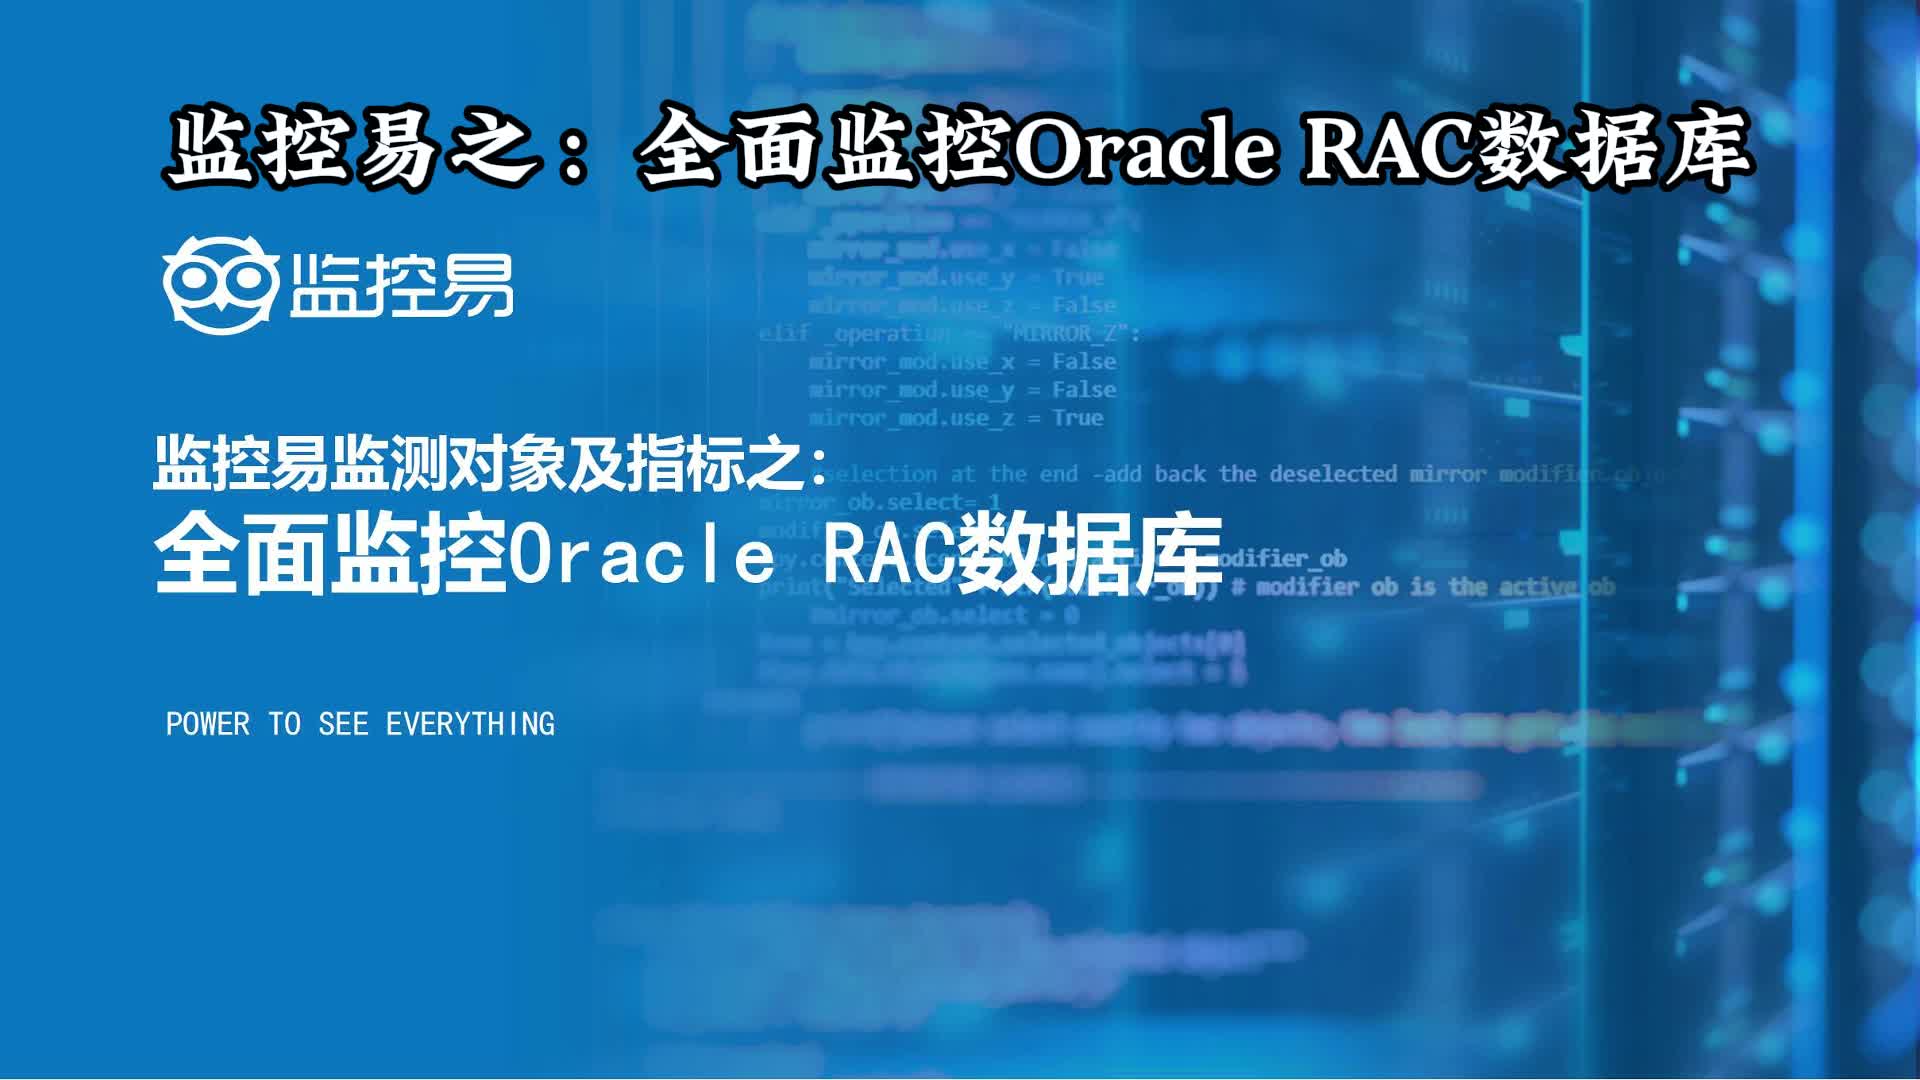 oracle 10g rac aix-Oracle10gRACAIX：让多台电脑像超级英雄一样团结协